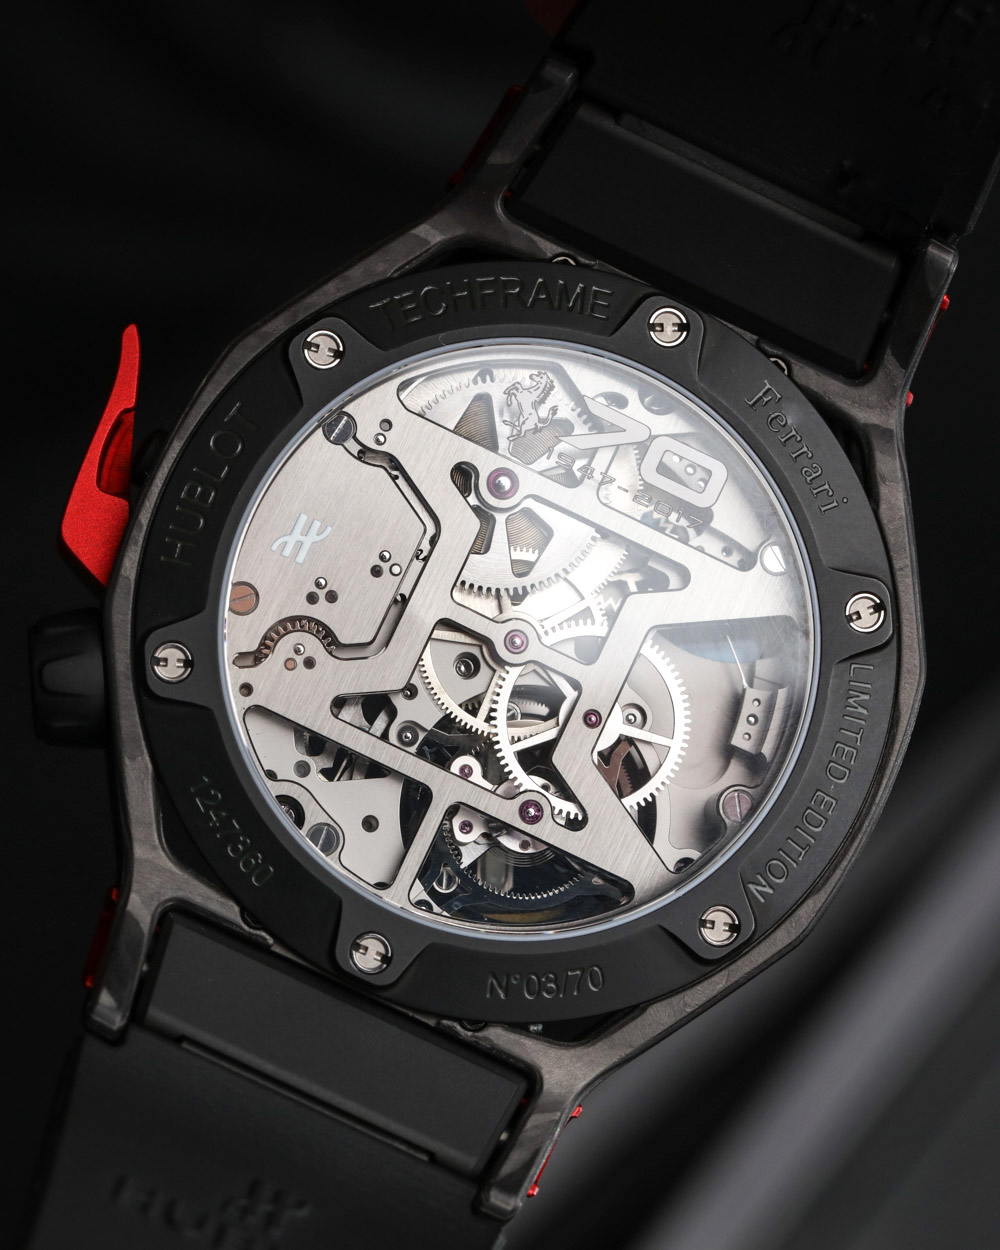 Hublot Techframe Ferrari 70 Years Tourbillon Chronograph Watch Hands-On Hands-On 